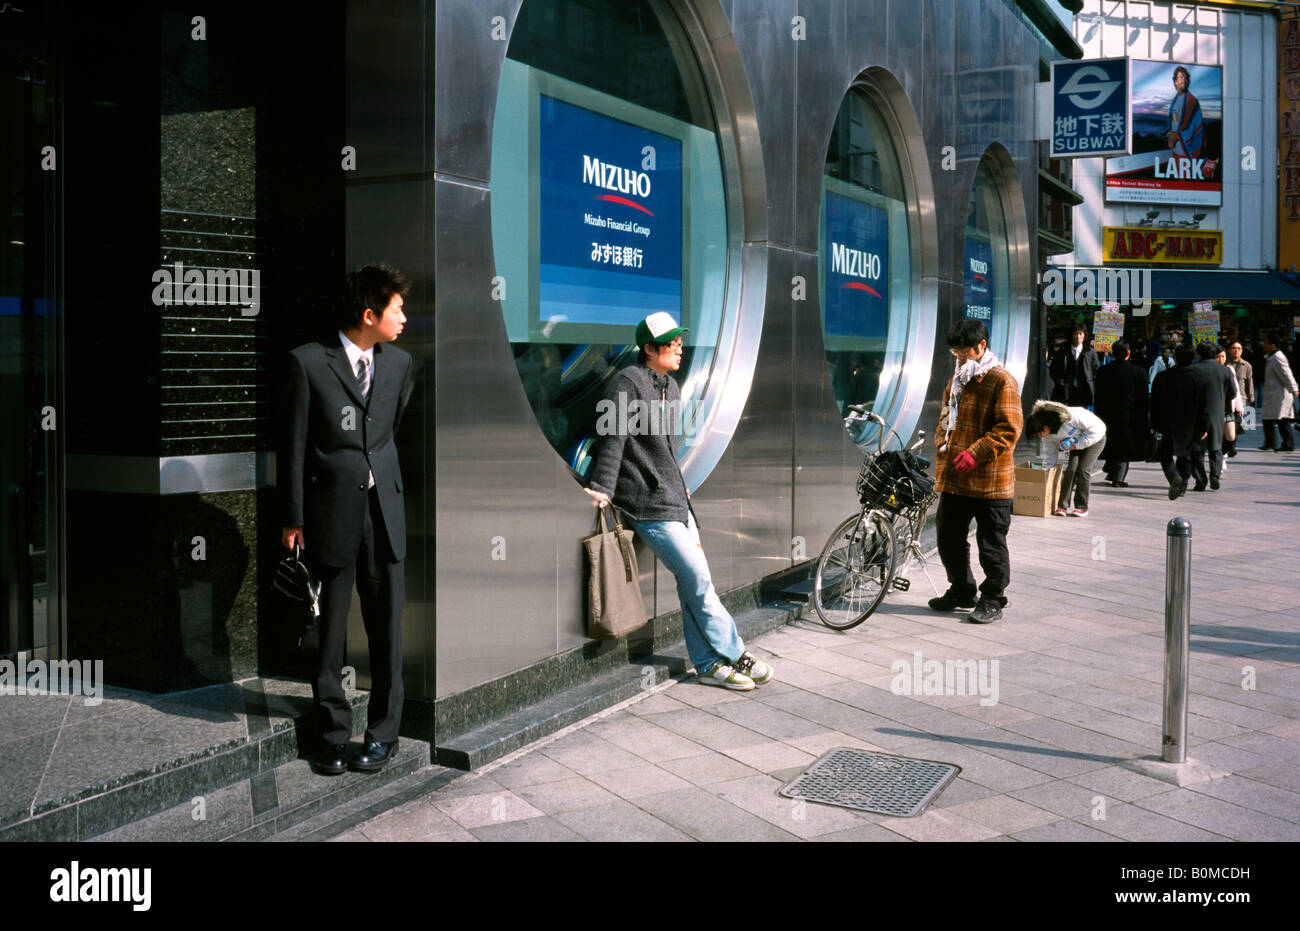 Oct 31, 2004 - Branch of the Mizuho Bank in Tokyo's Shinjuku. Stock Photo